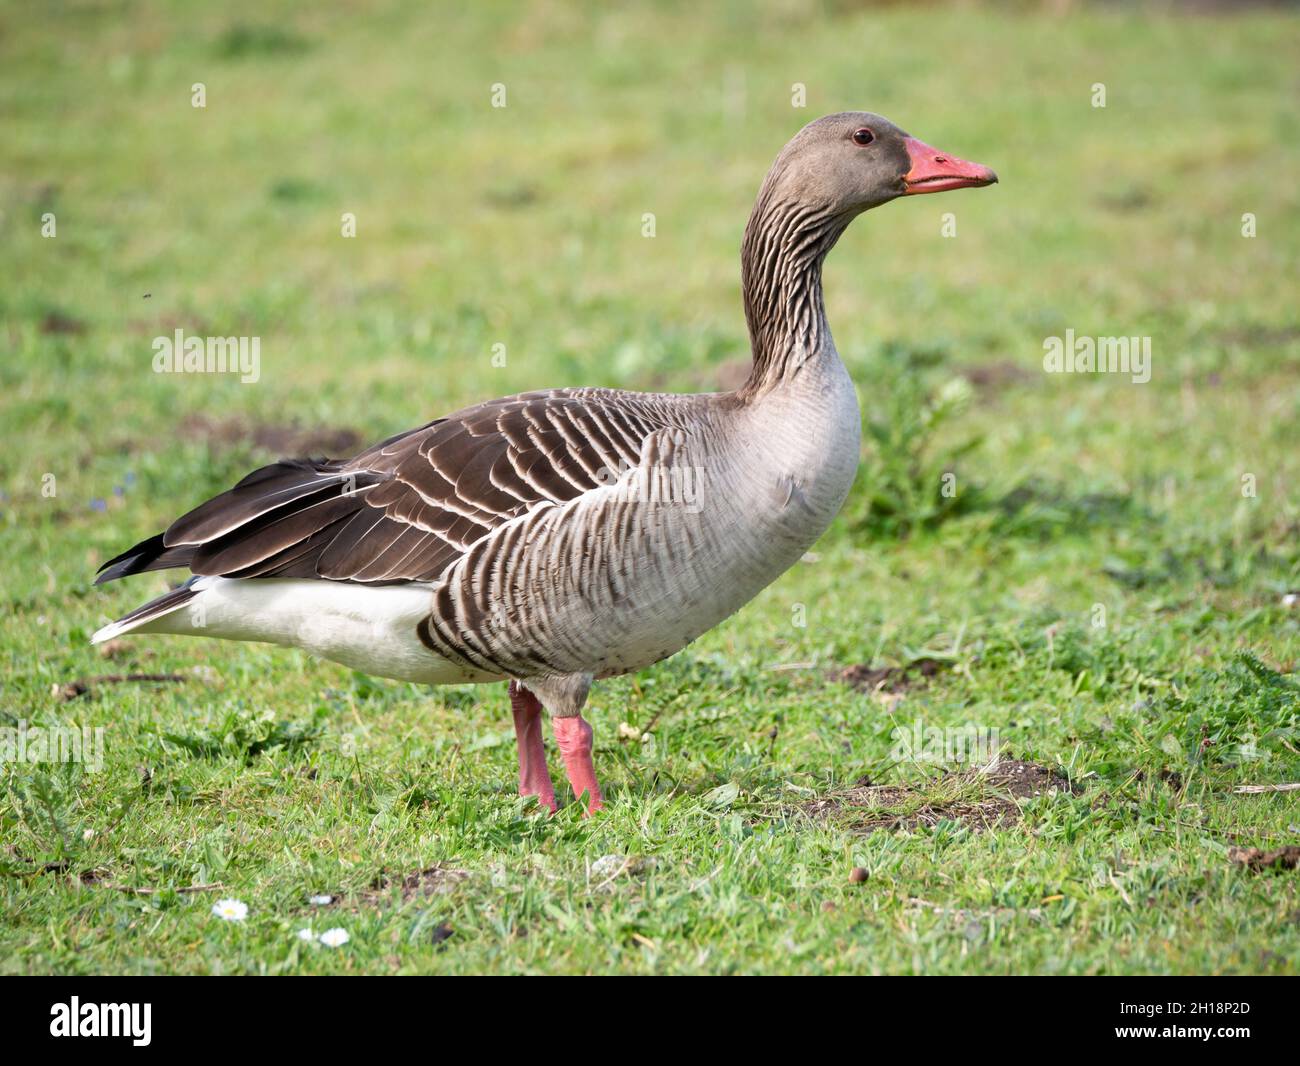 Ganso Graylag, Anser anser, vista lateral de ganso en pie en hierba, Países Bajos Foto de stock